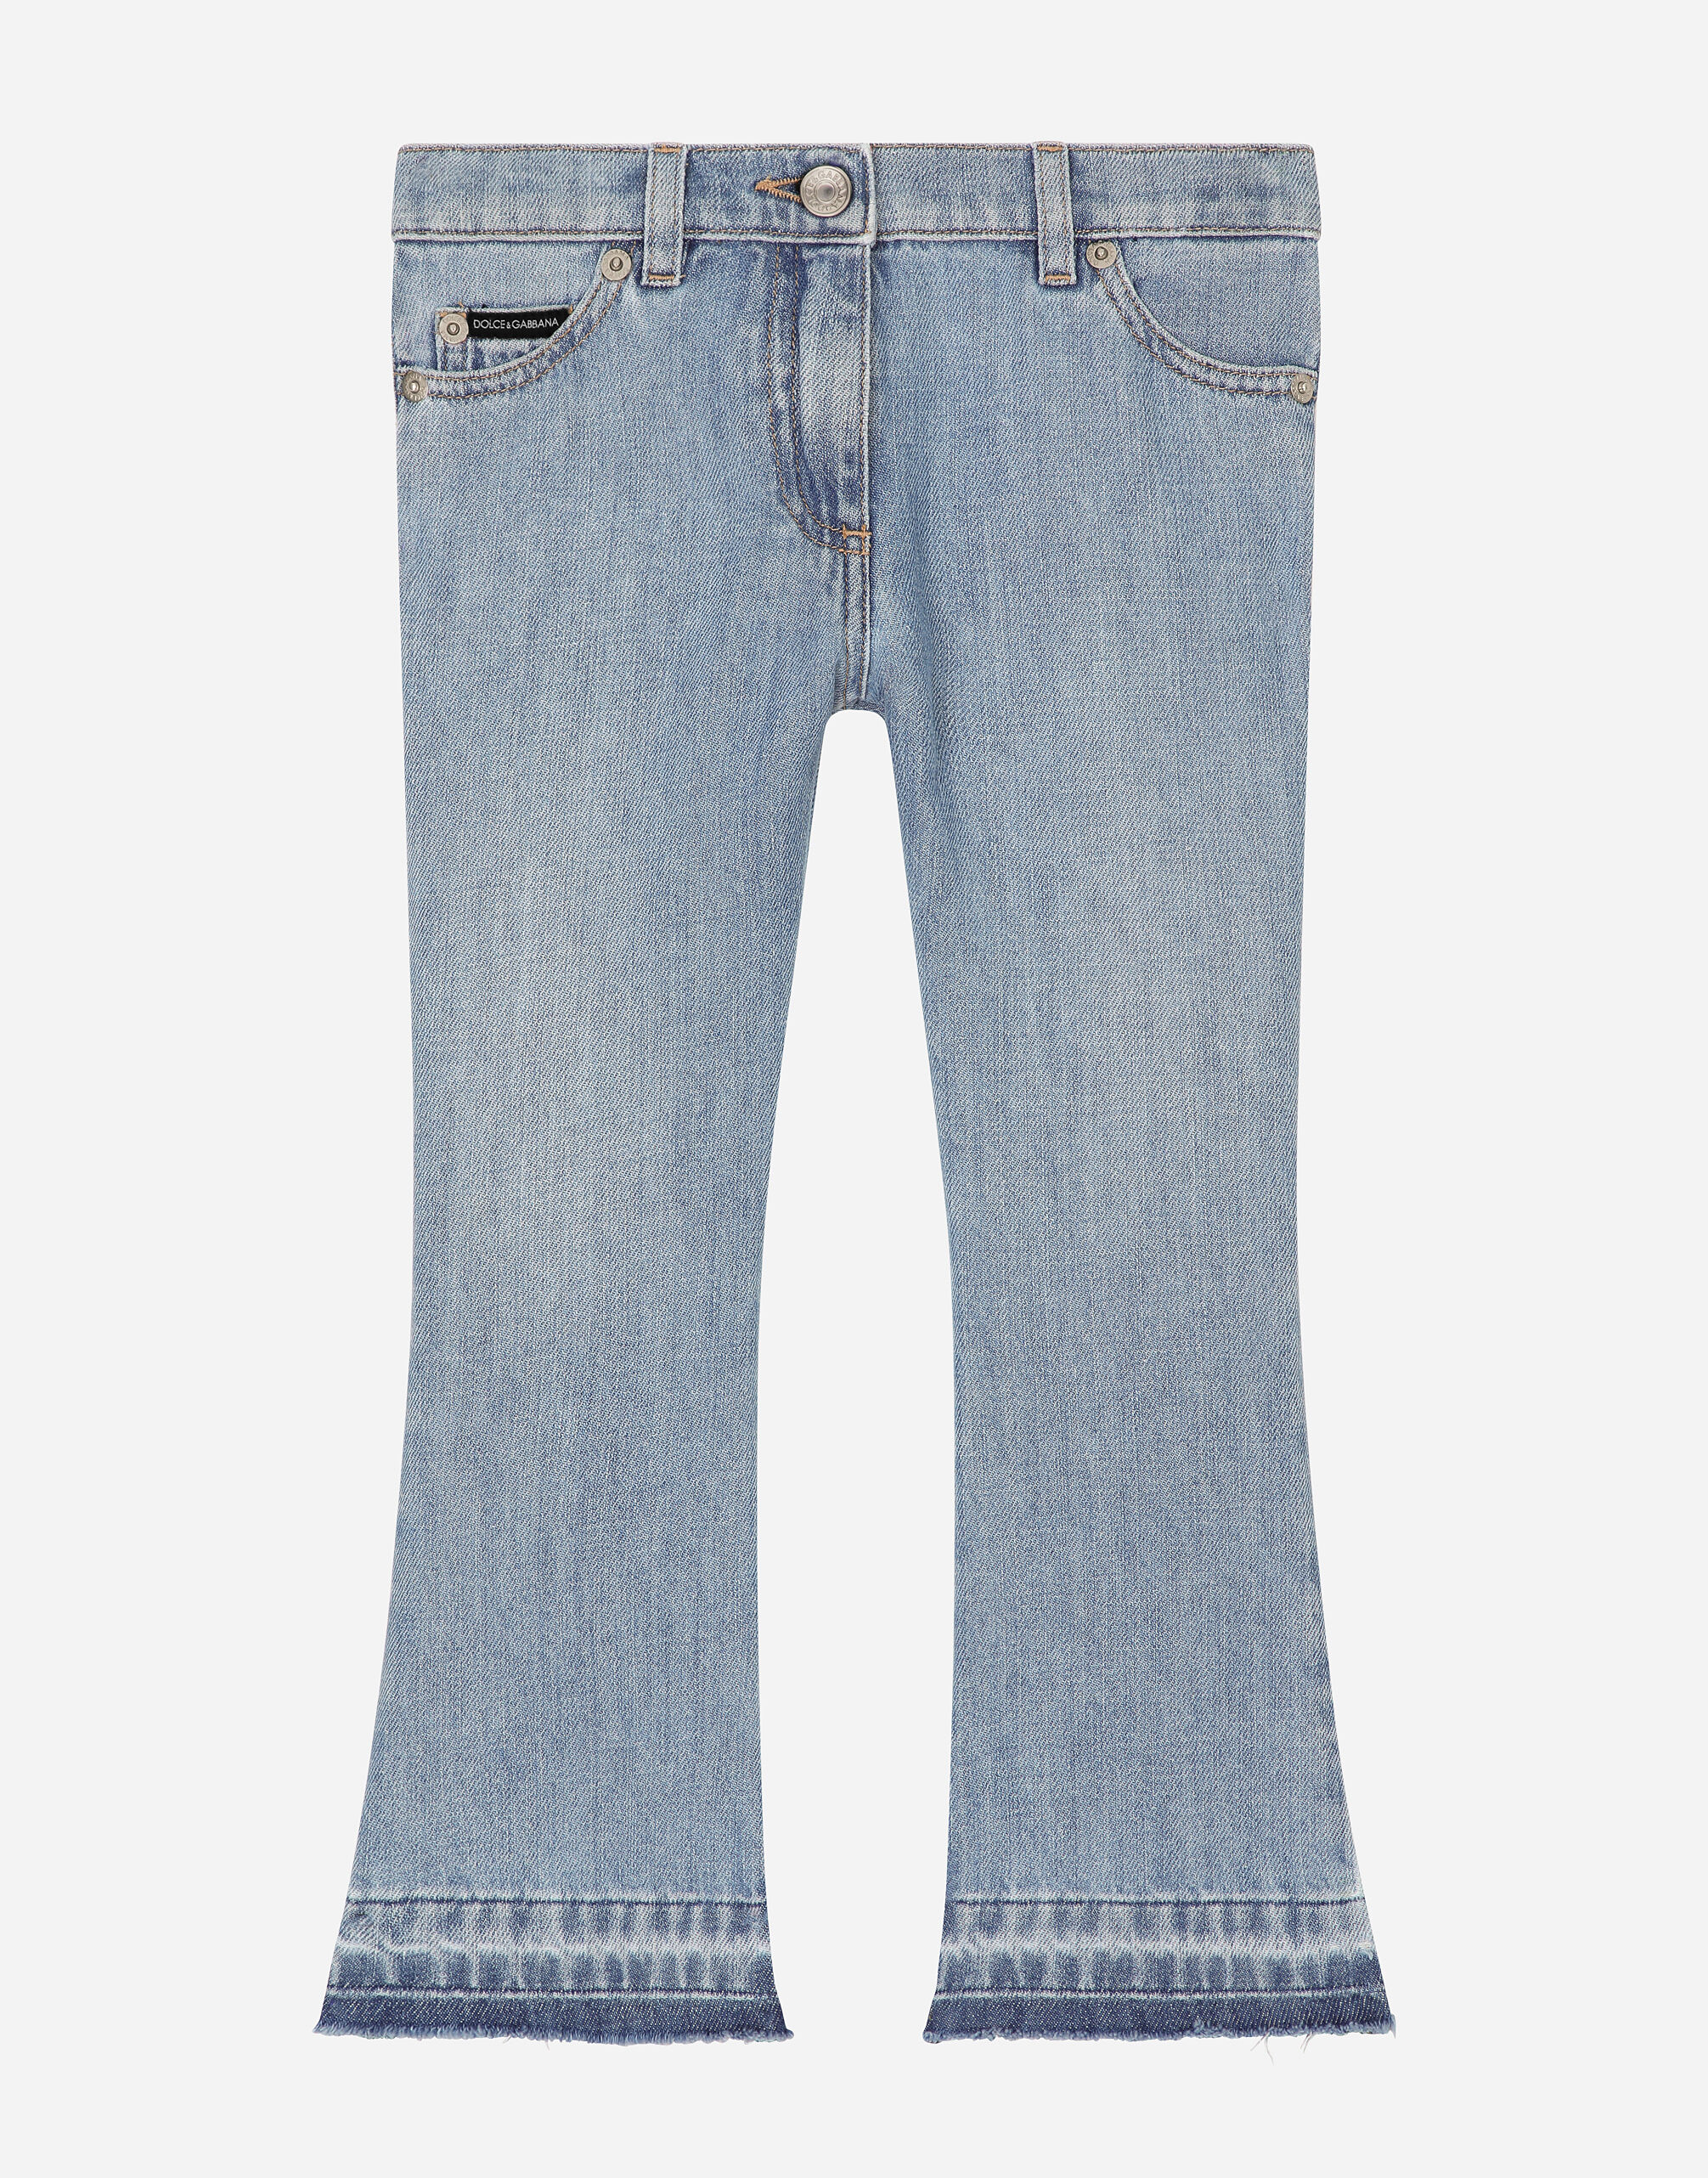 Dolce & Gabbana 5-pocket denim jeans with branded tag Multicolor DA5181AN571